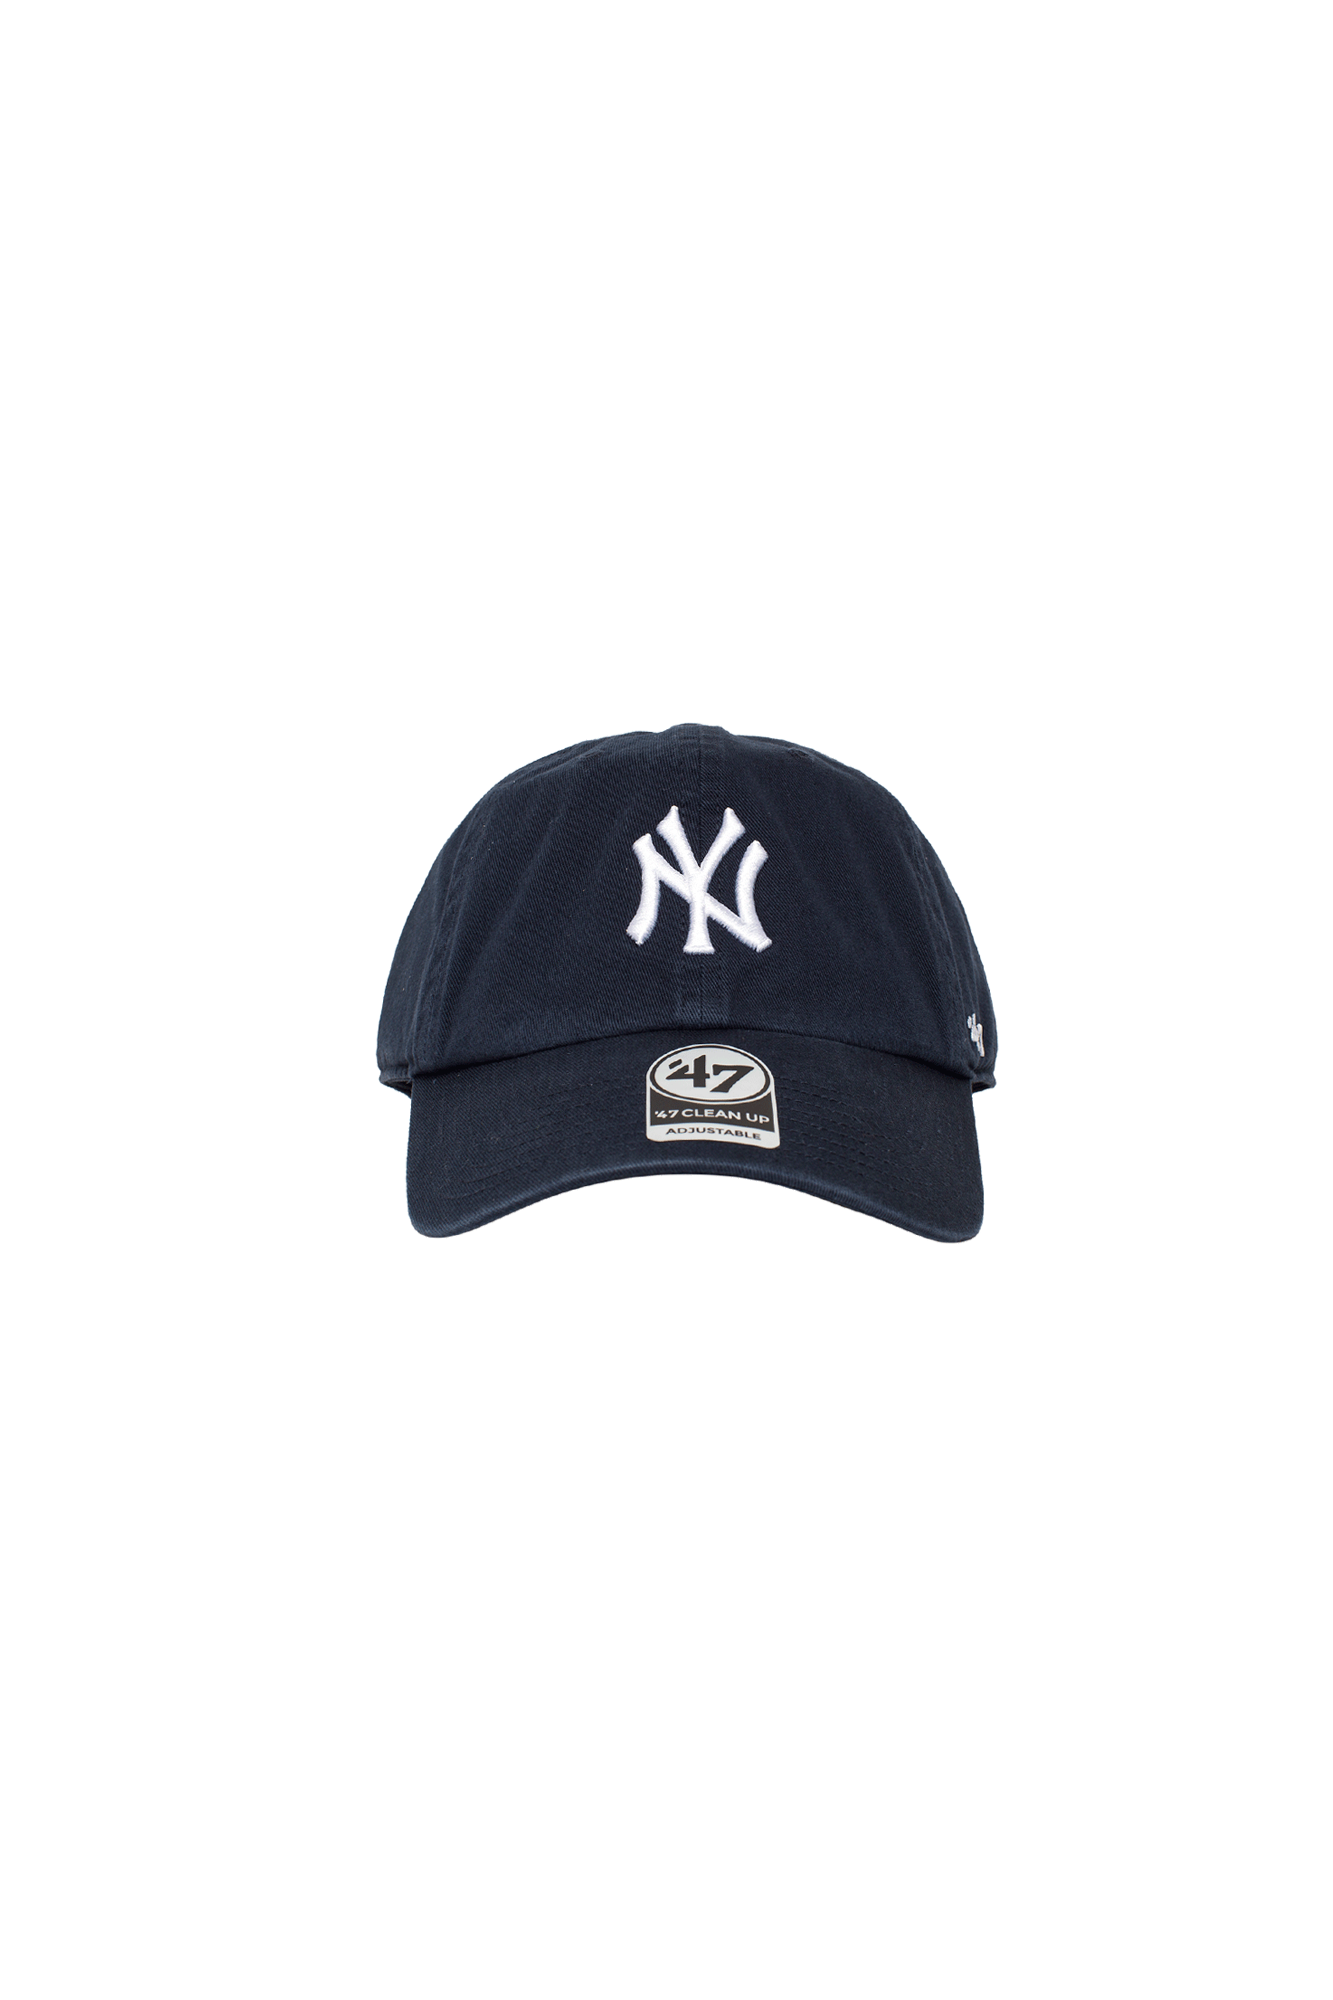 Clean Up New York Yankees